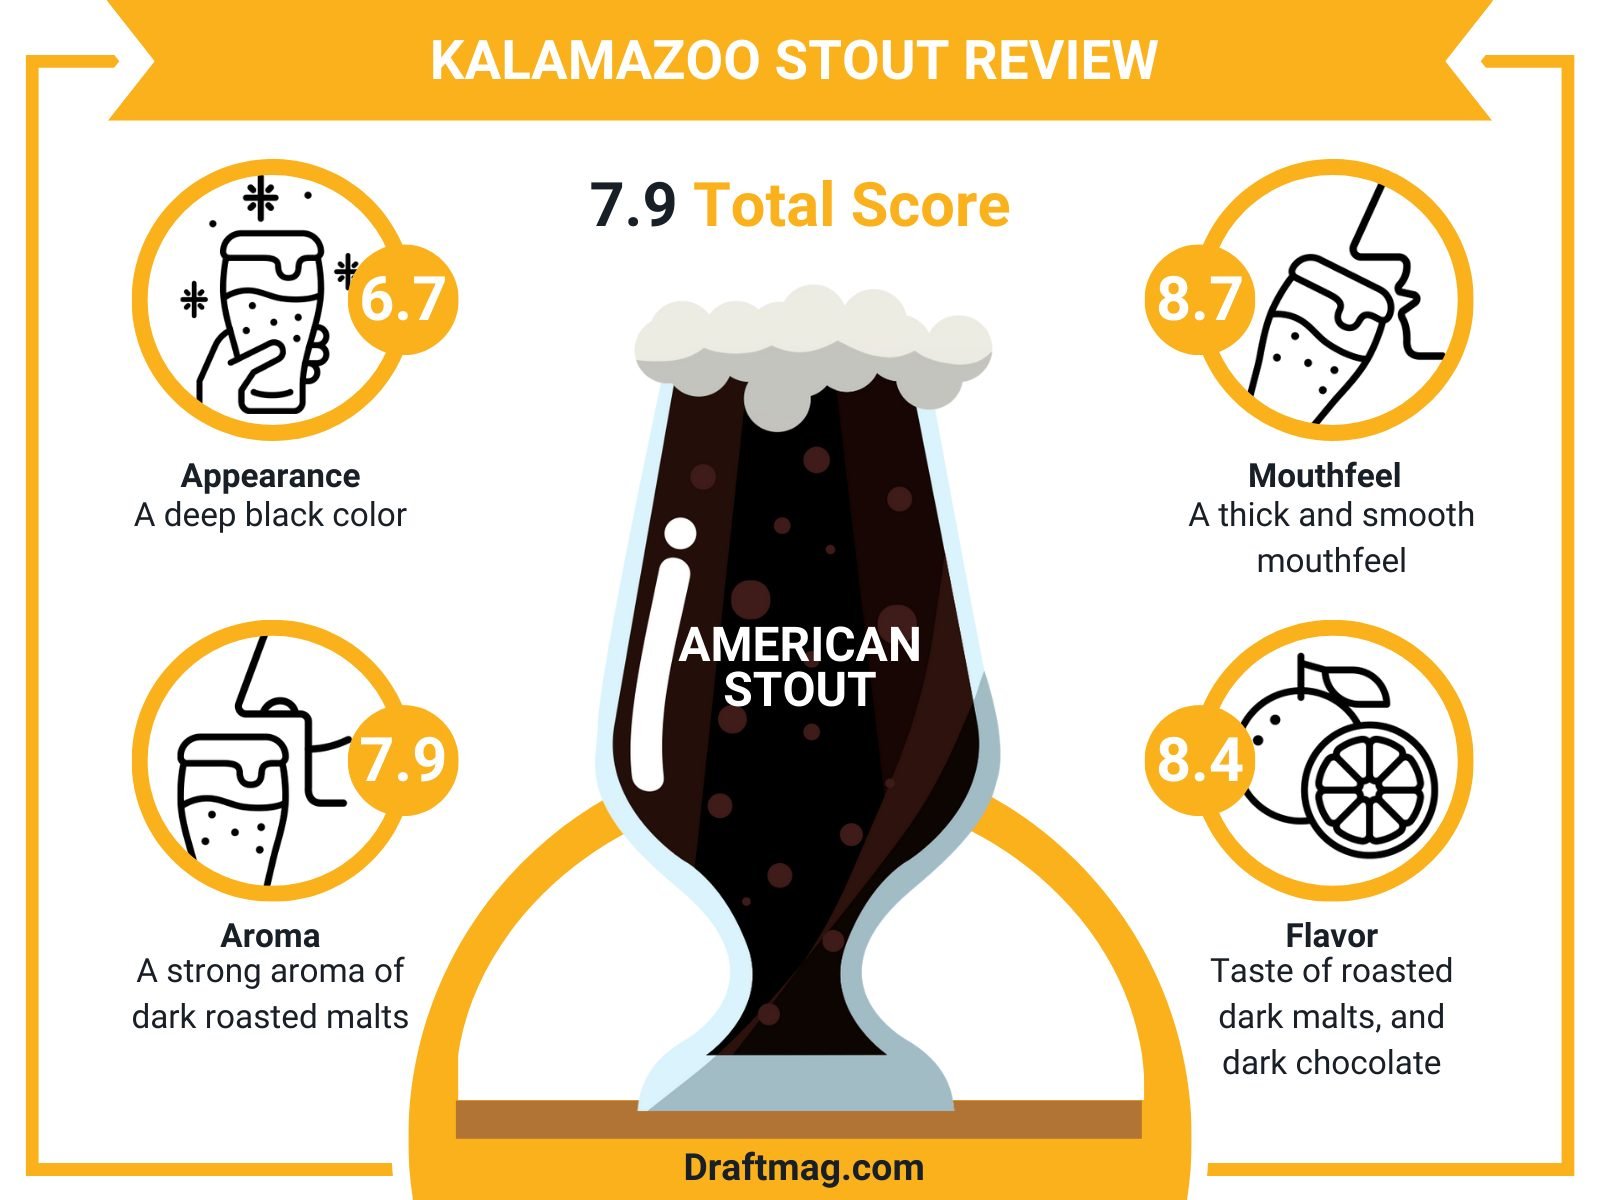 Kalamazoo Stout Review Infographic